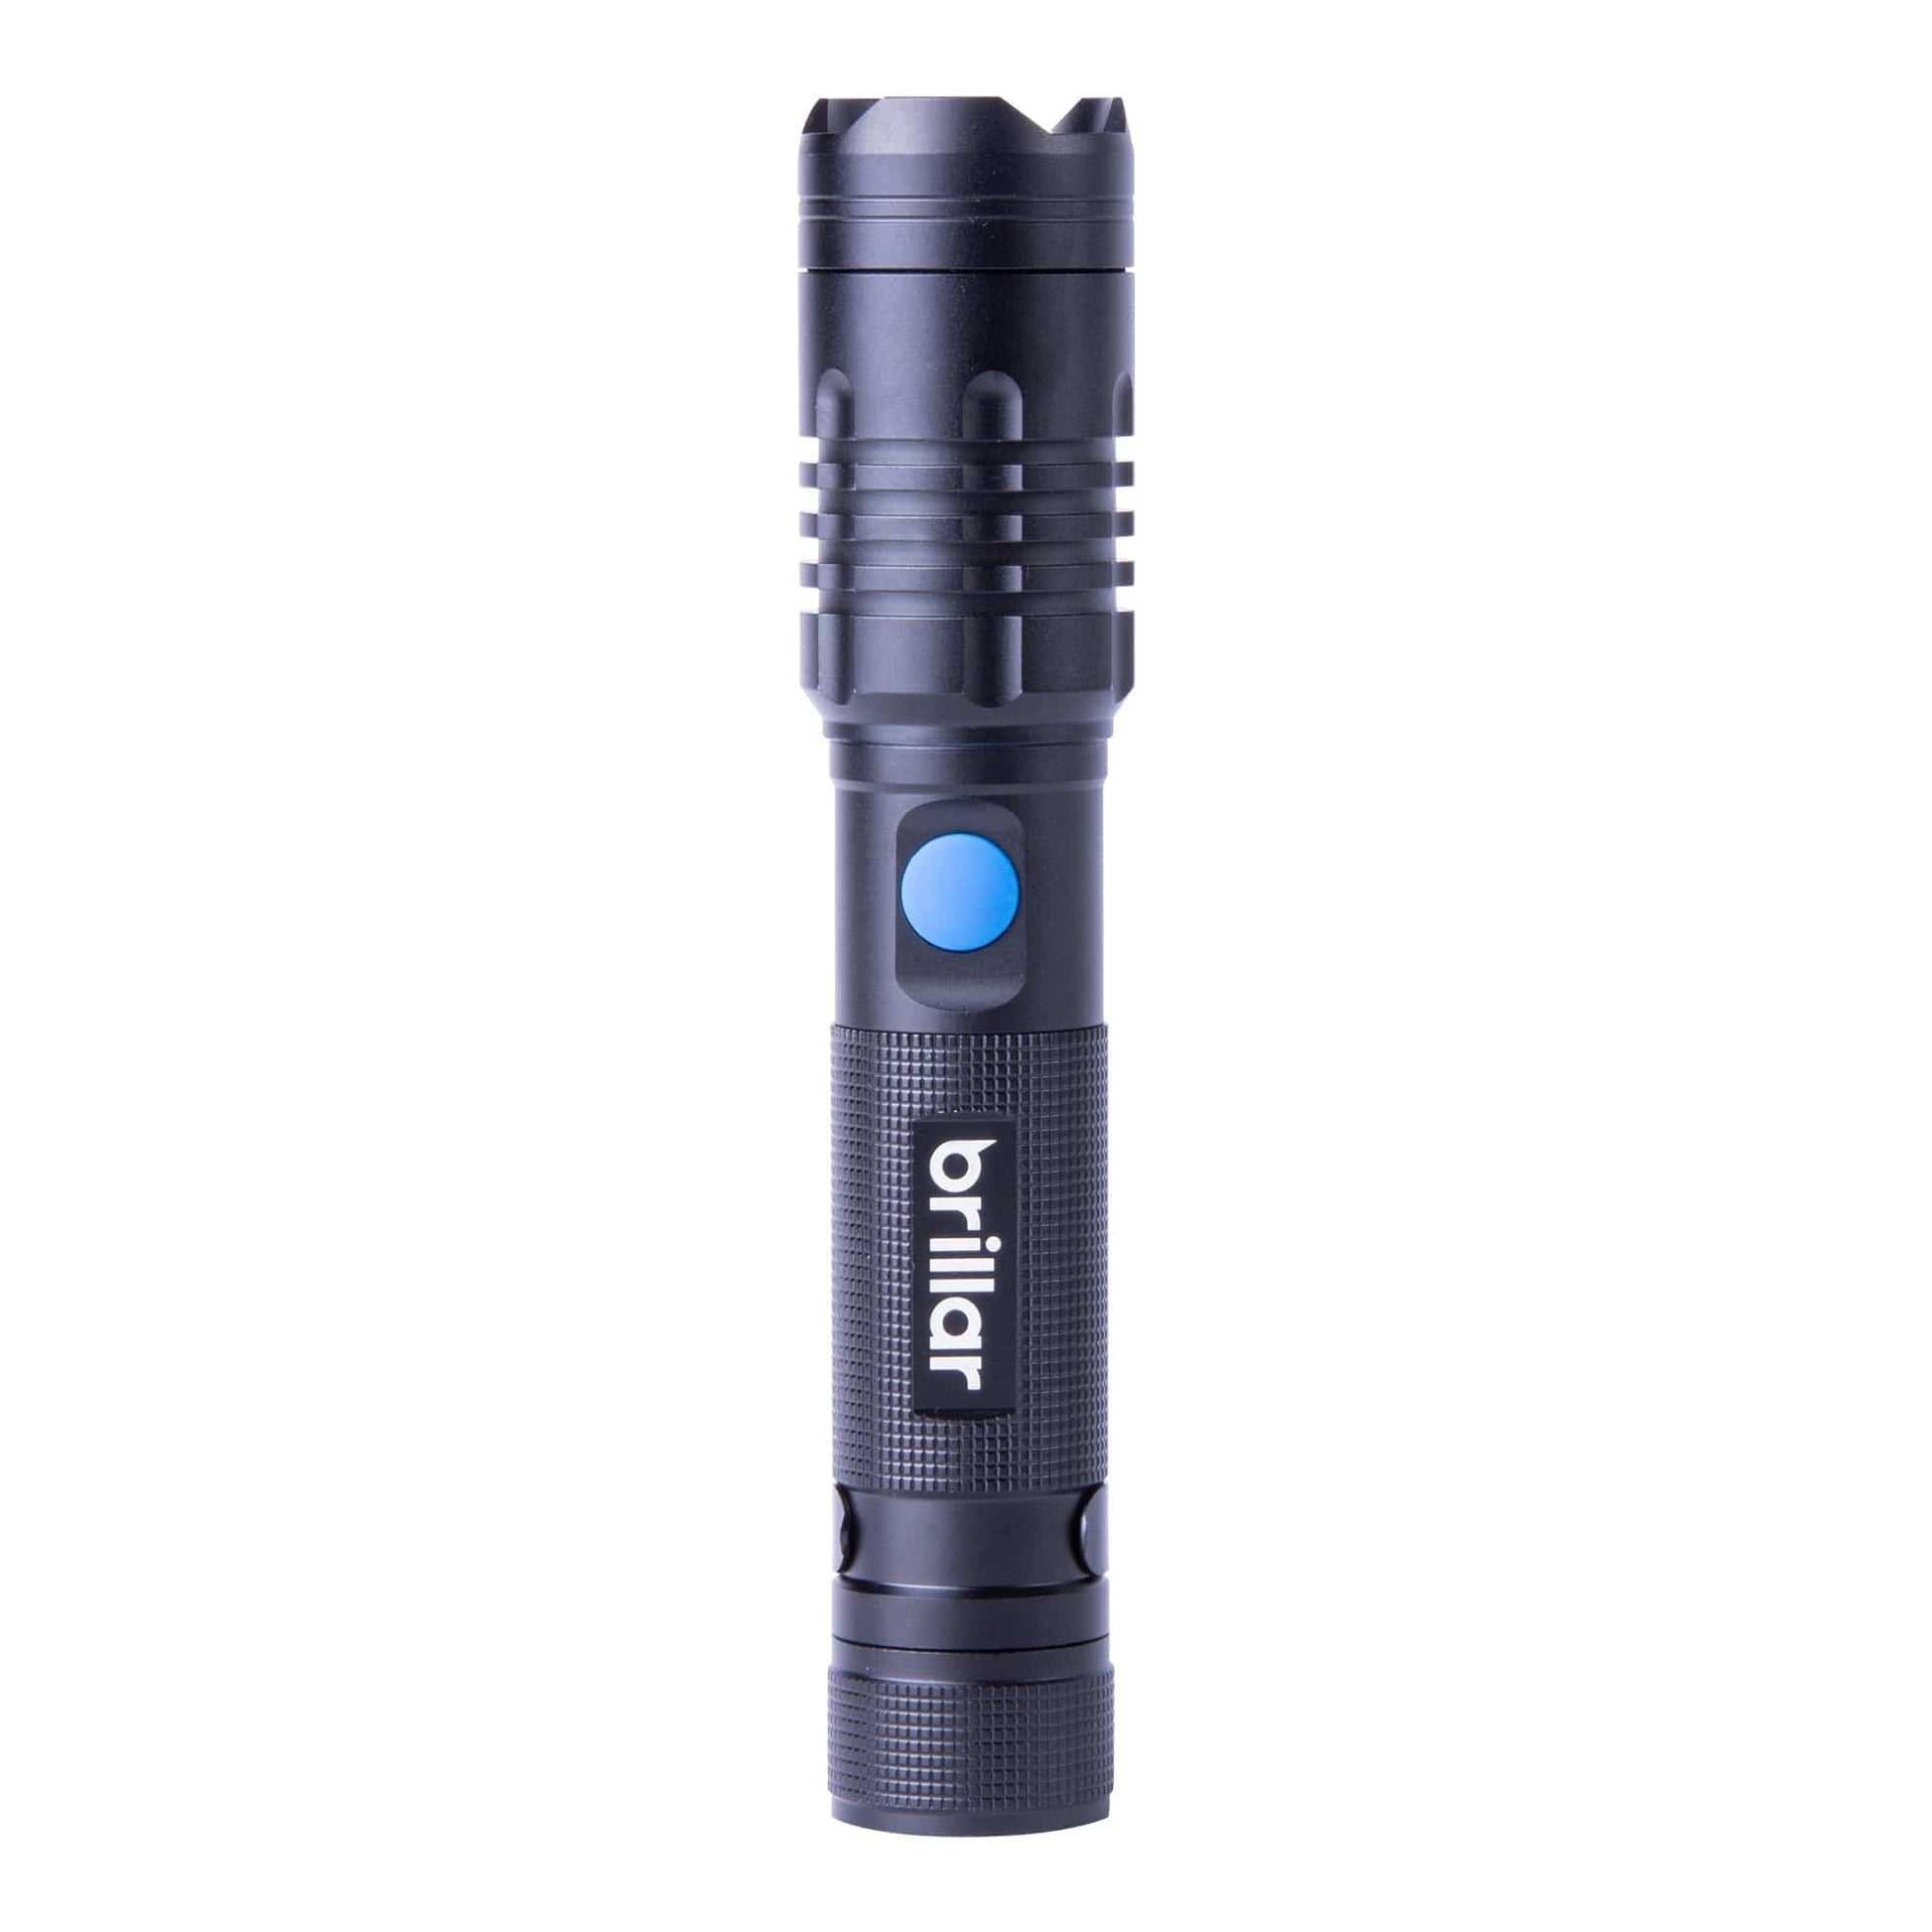 Brillar Flashlights Brillar Investigator Flashlight  - 1000 Lumen USB Rechargeable Torch